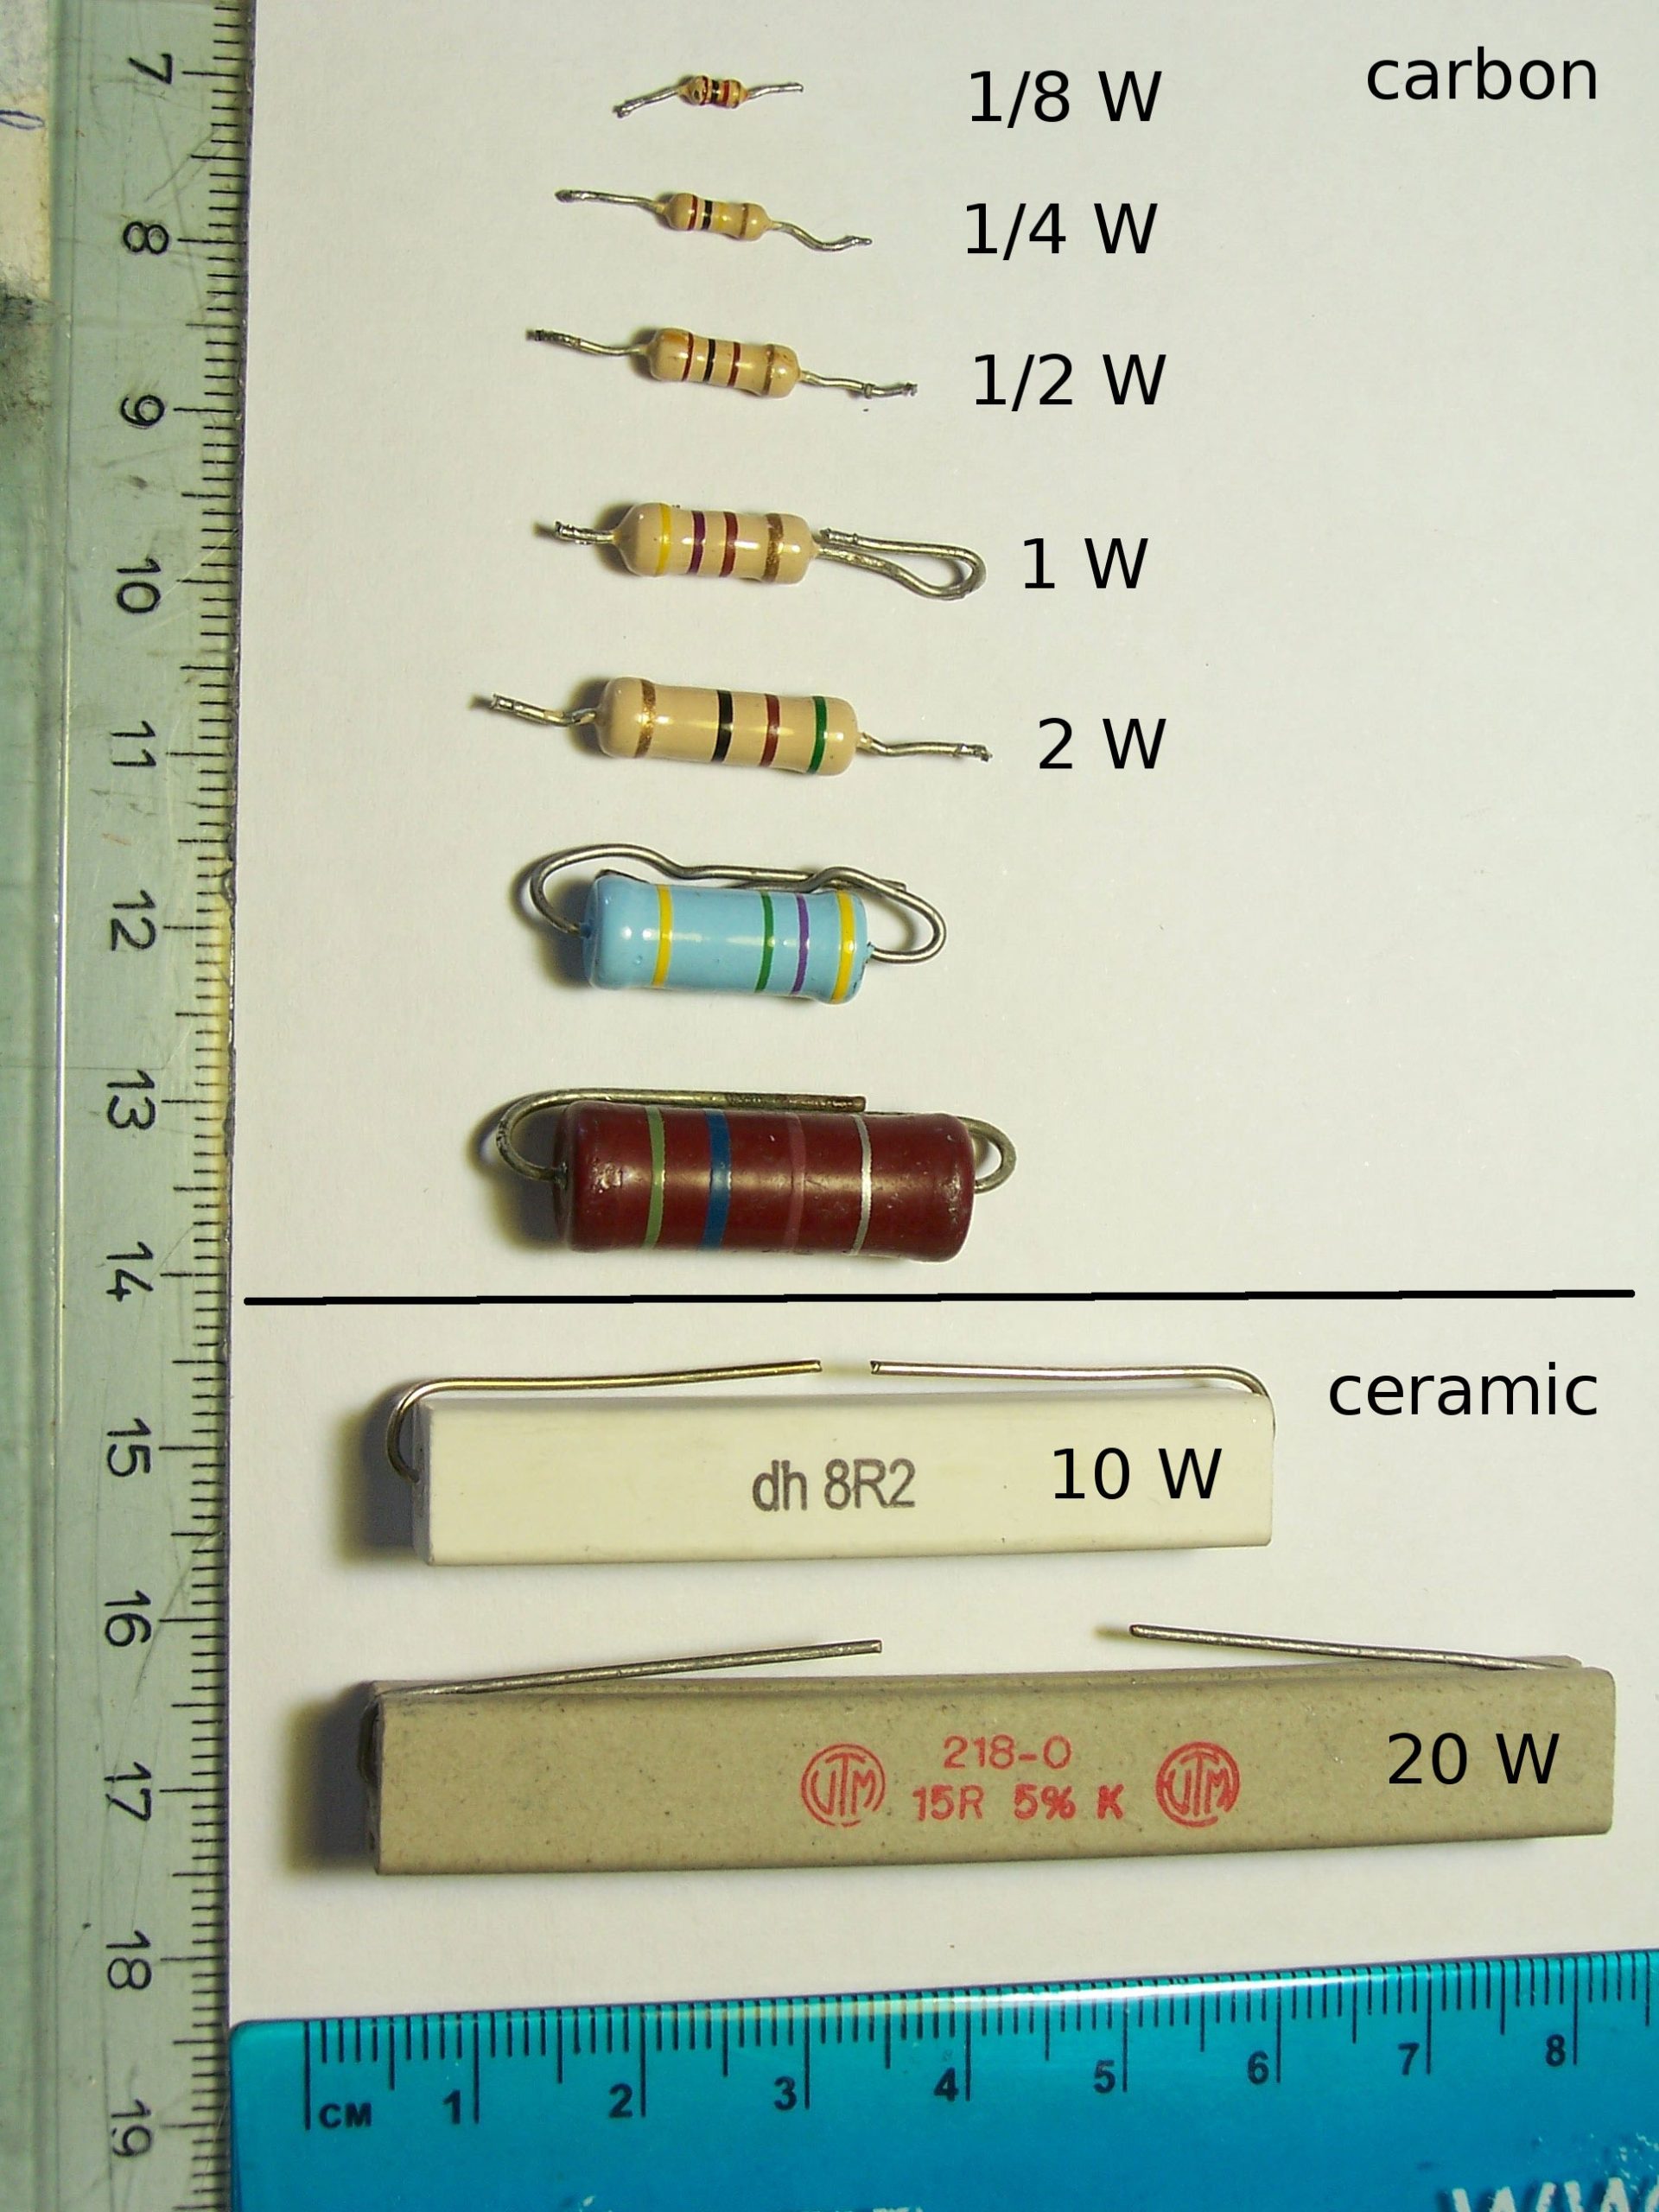 Different resistor sizes